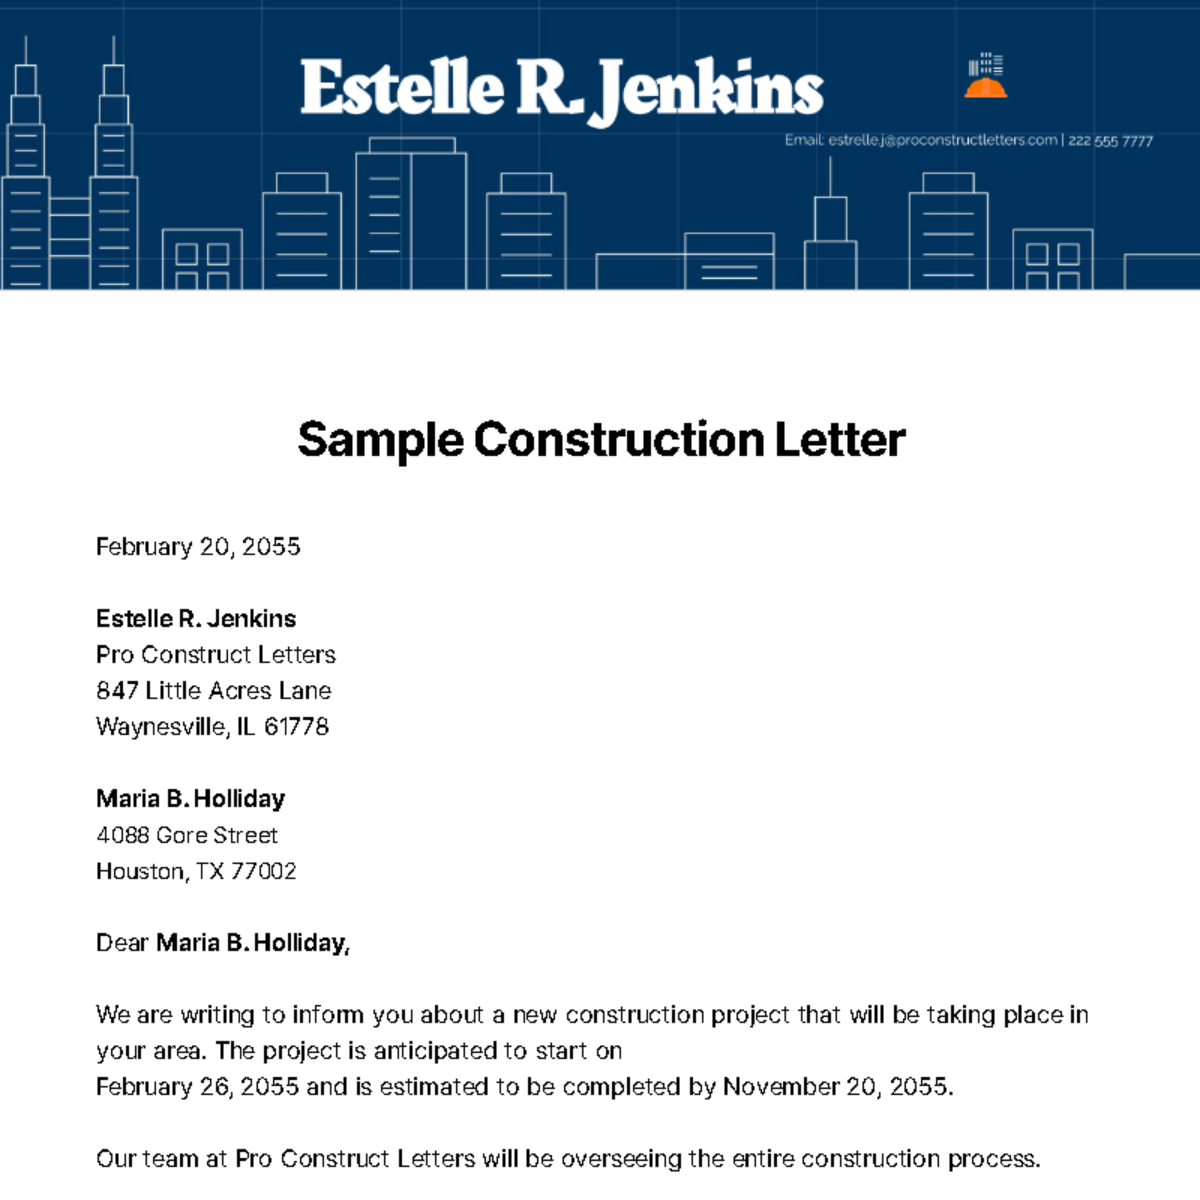 Sample Construction Letter Template